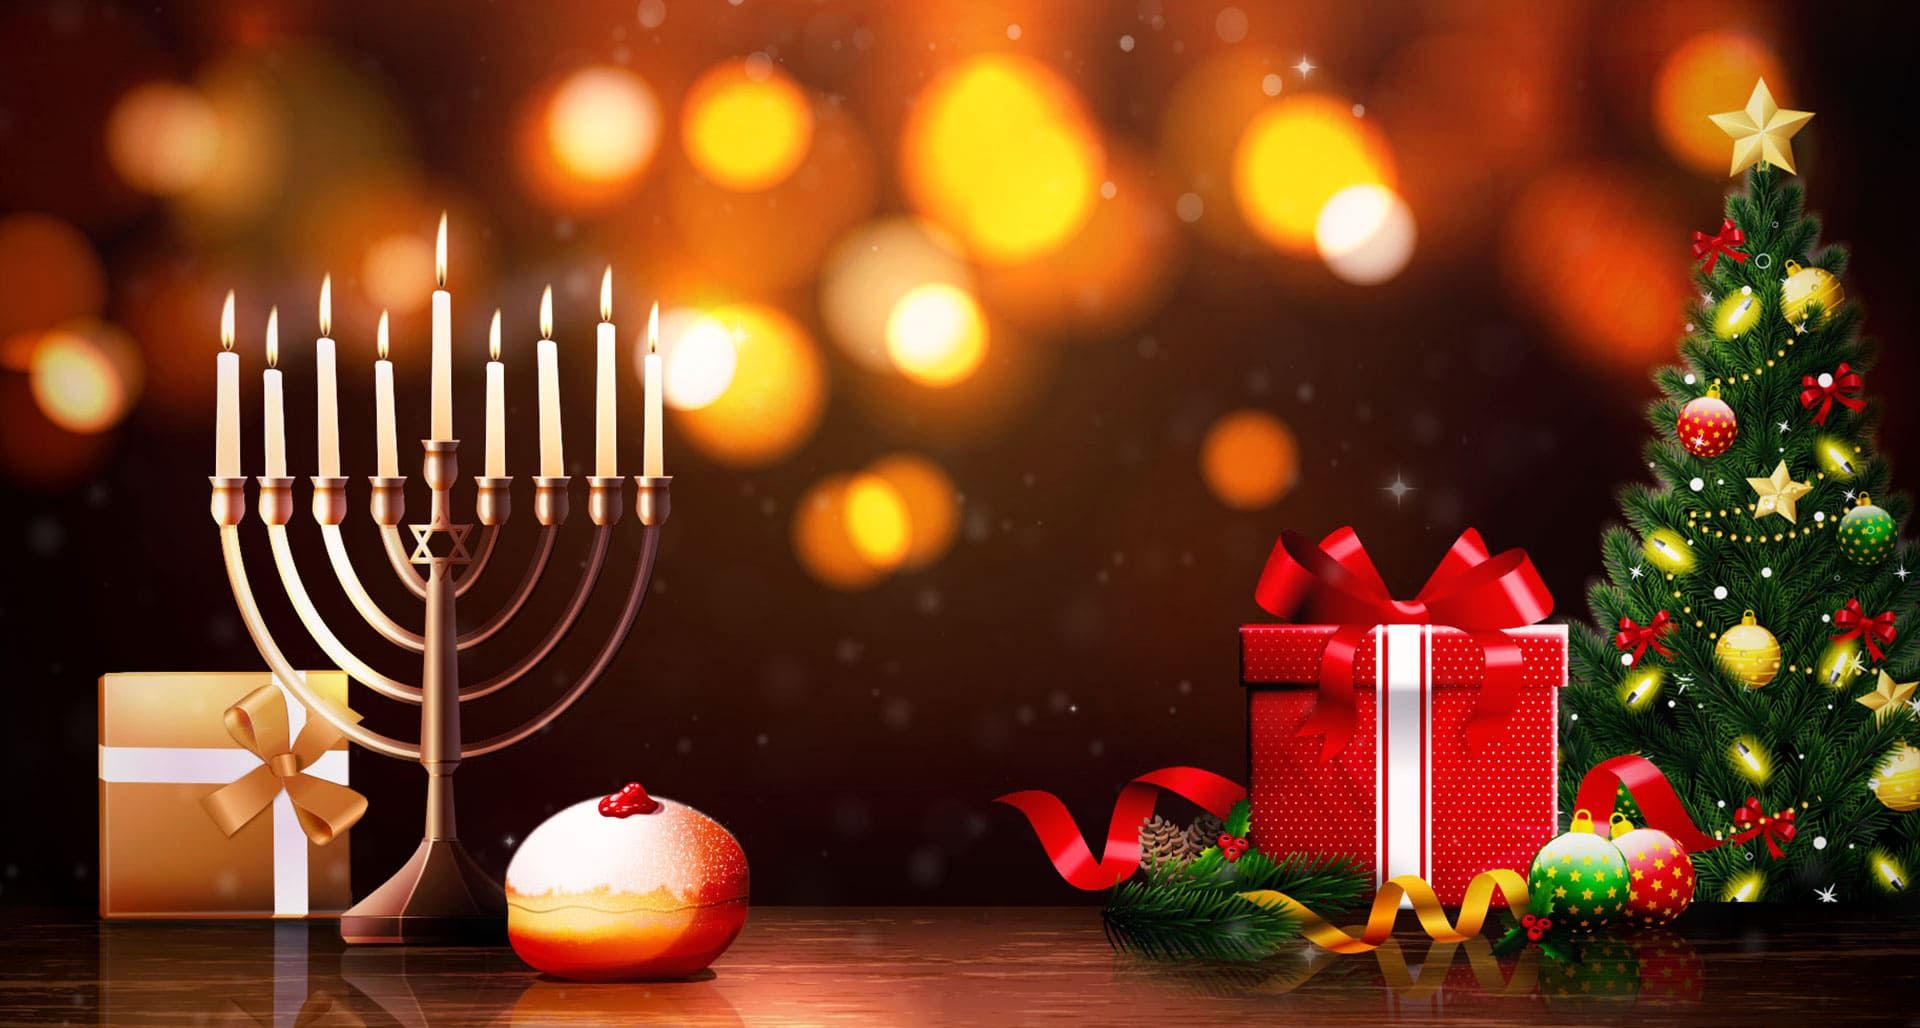 Hanukkah and Christmas